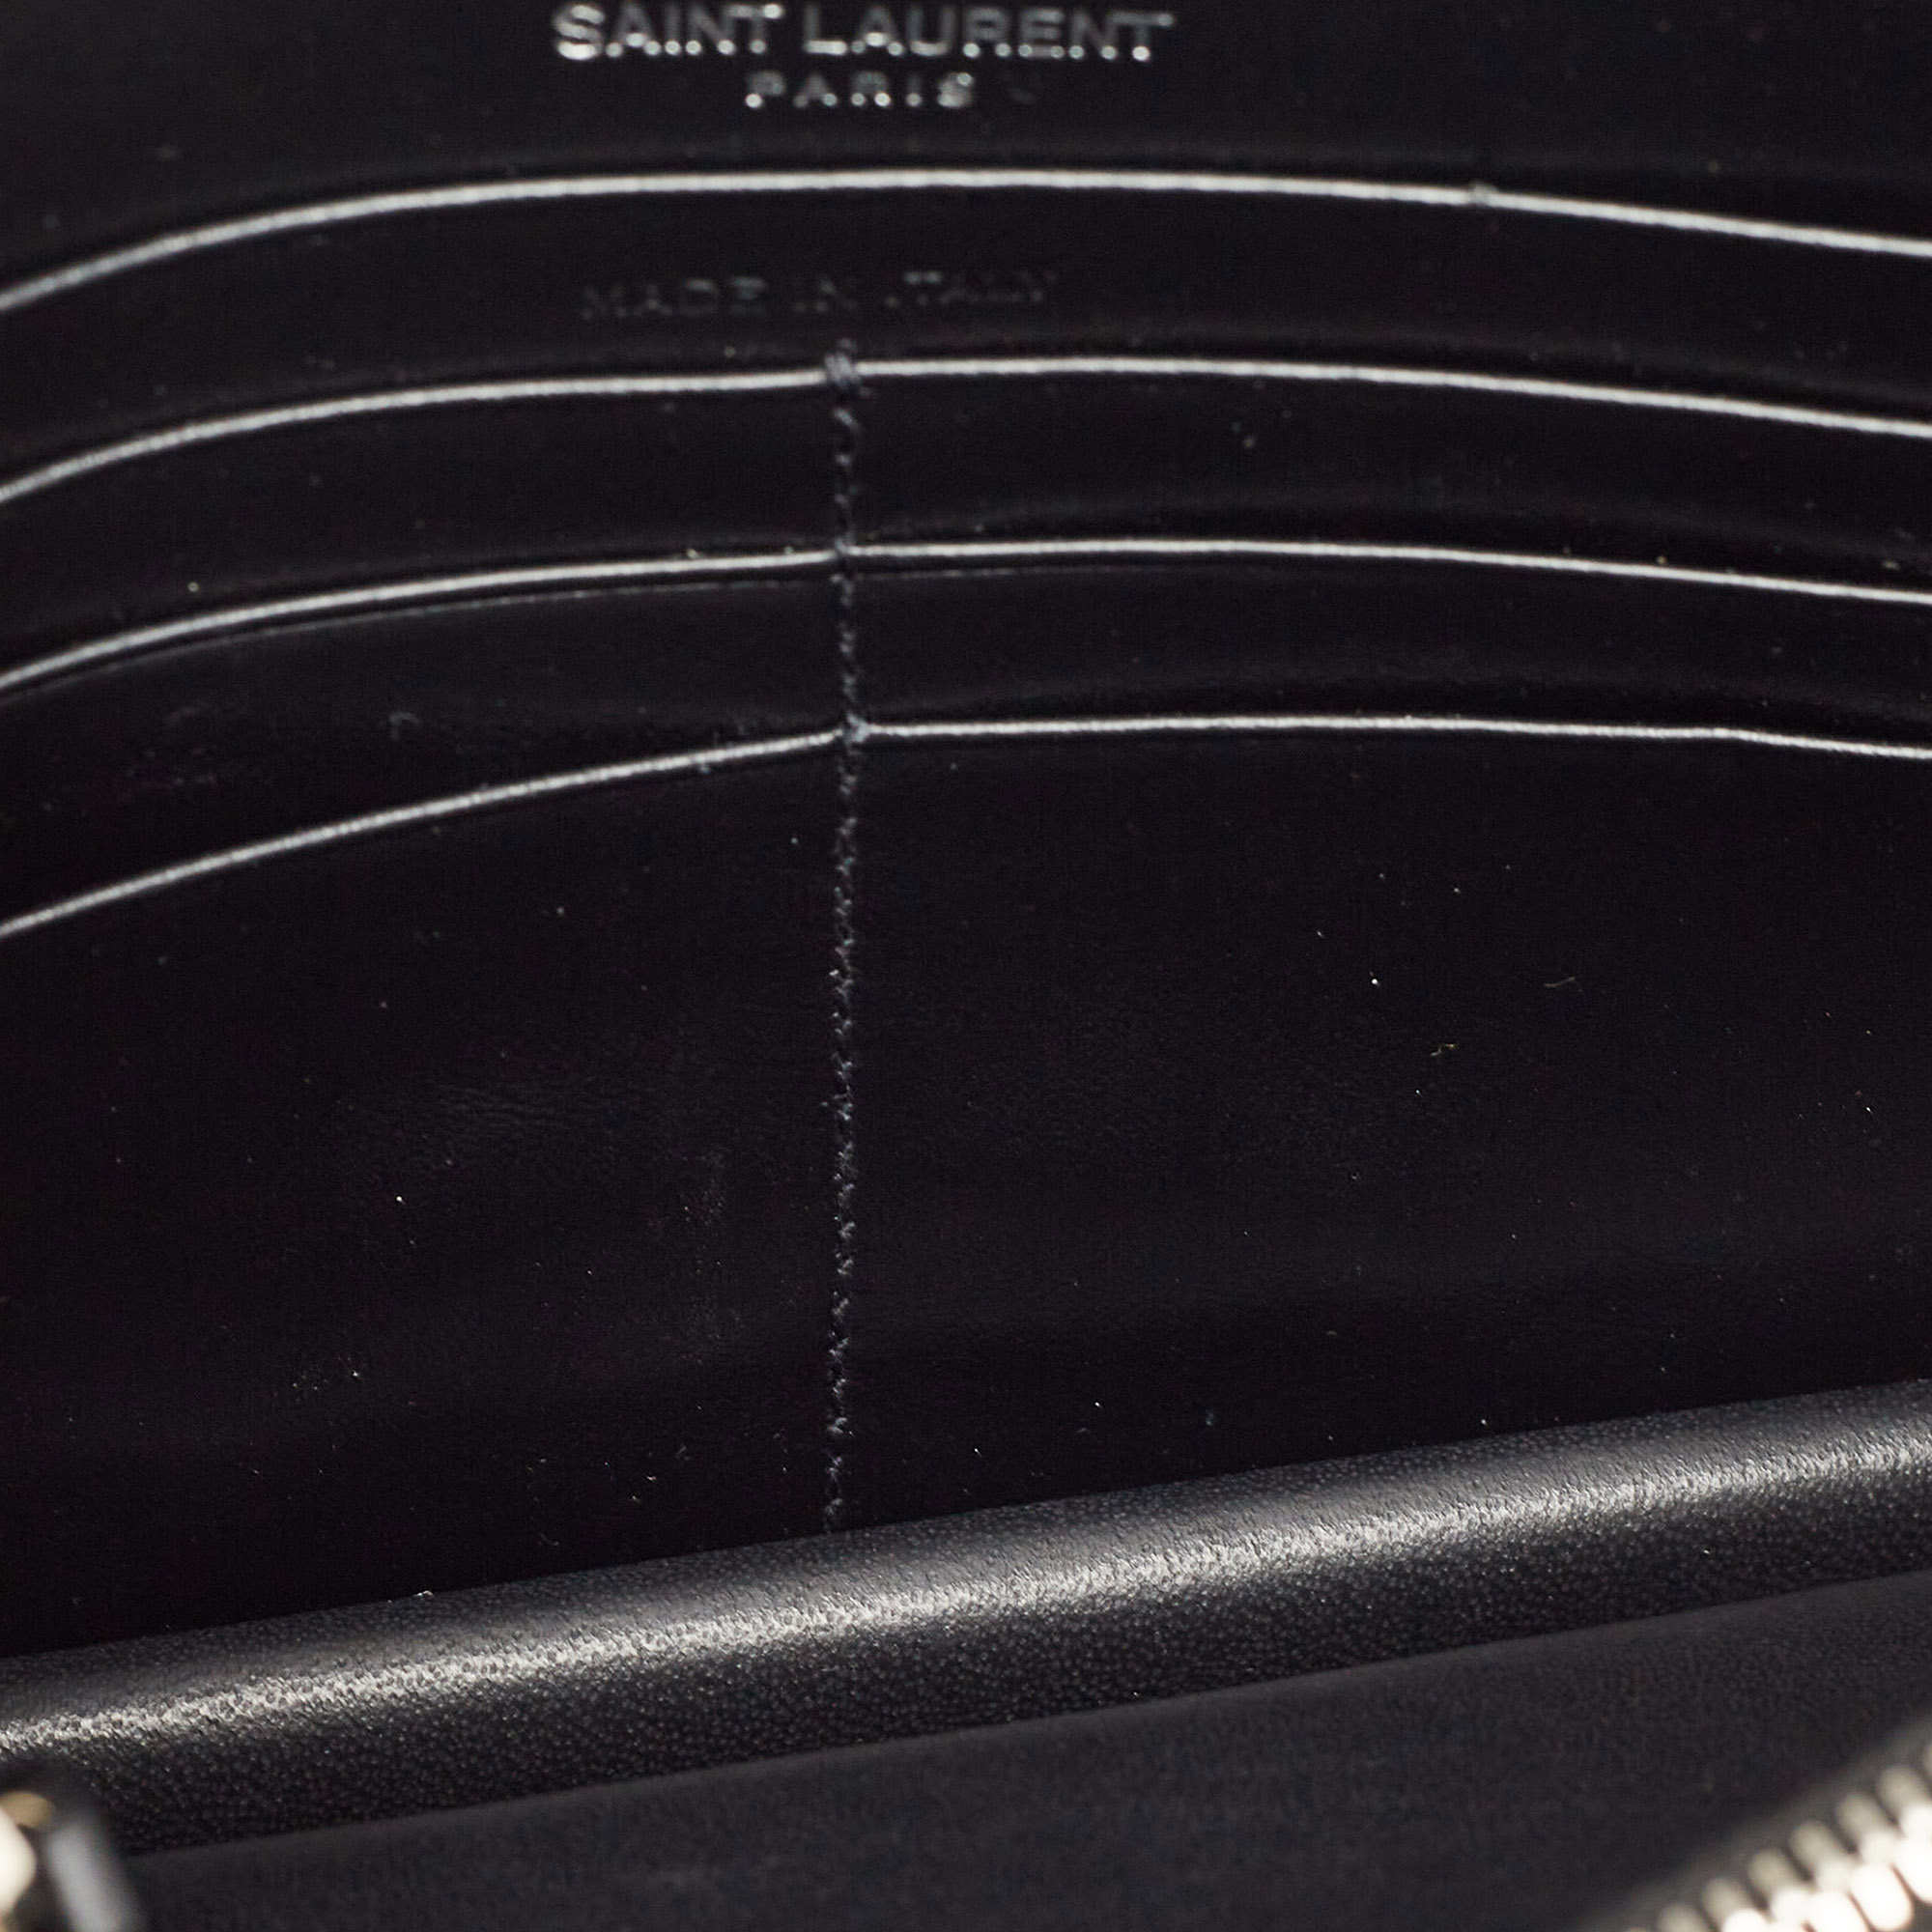 Saint Laurent Black/Silver Star Print Leather Kate Tassel Wallet On Chain